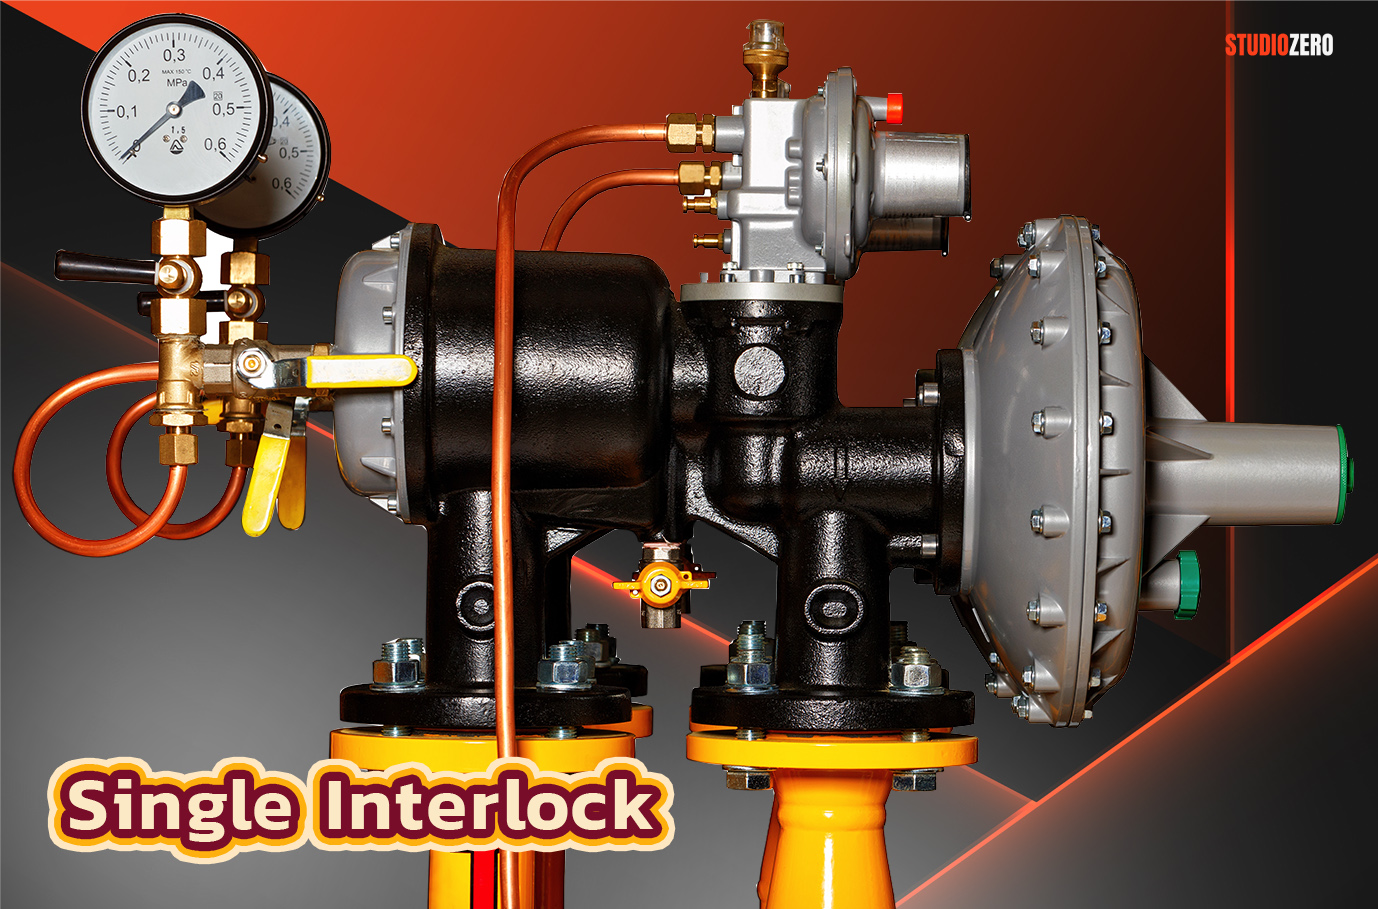 2.Single Interlock